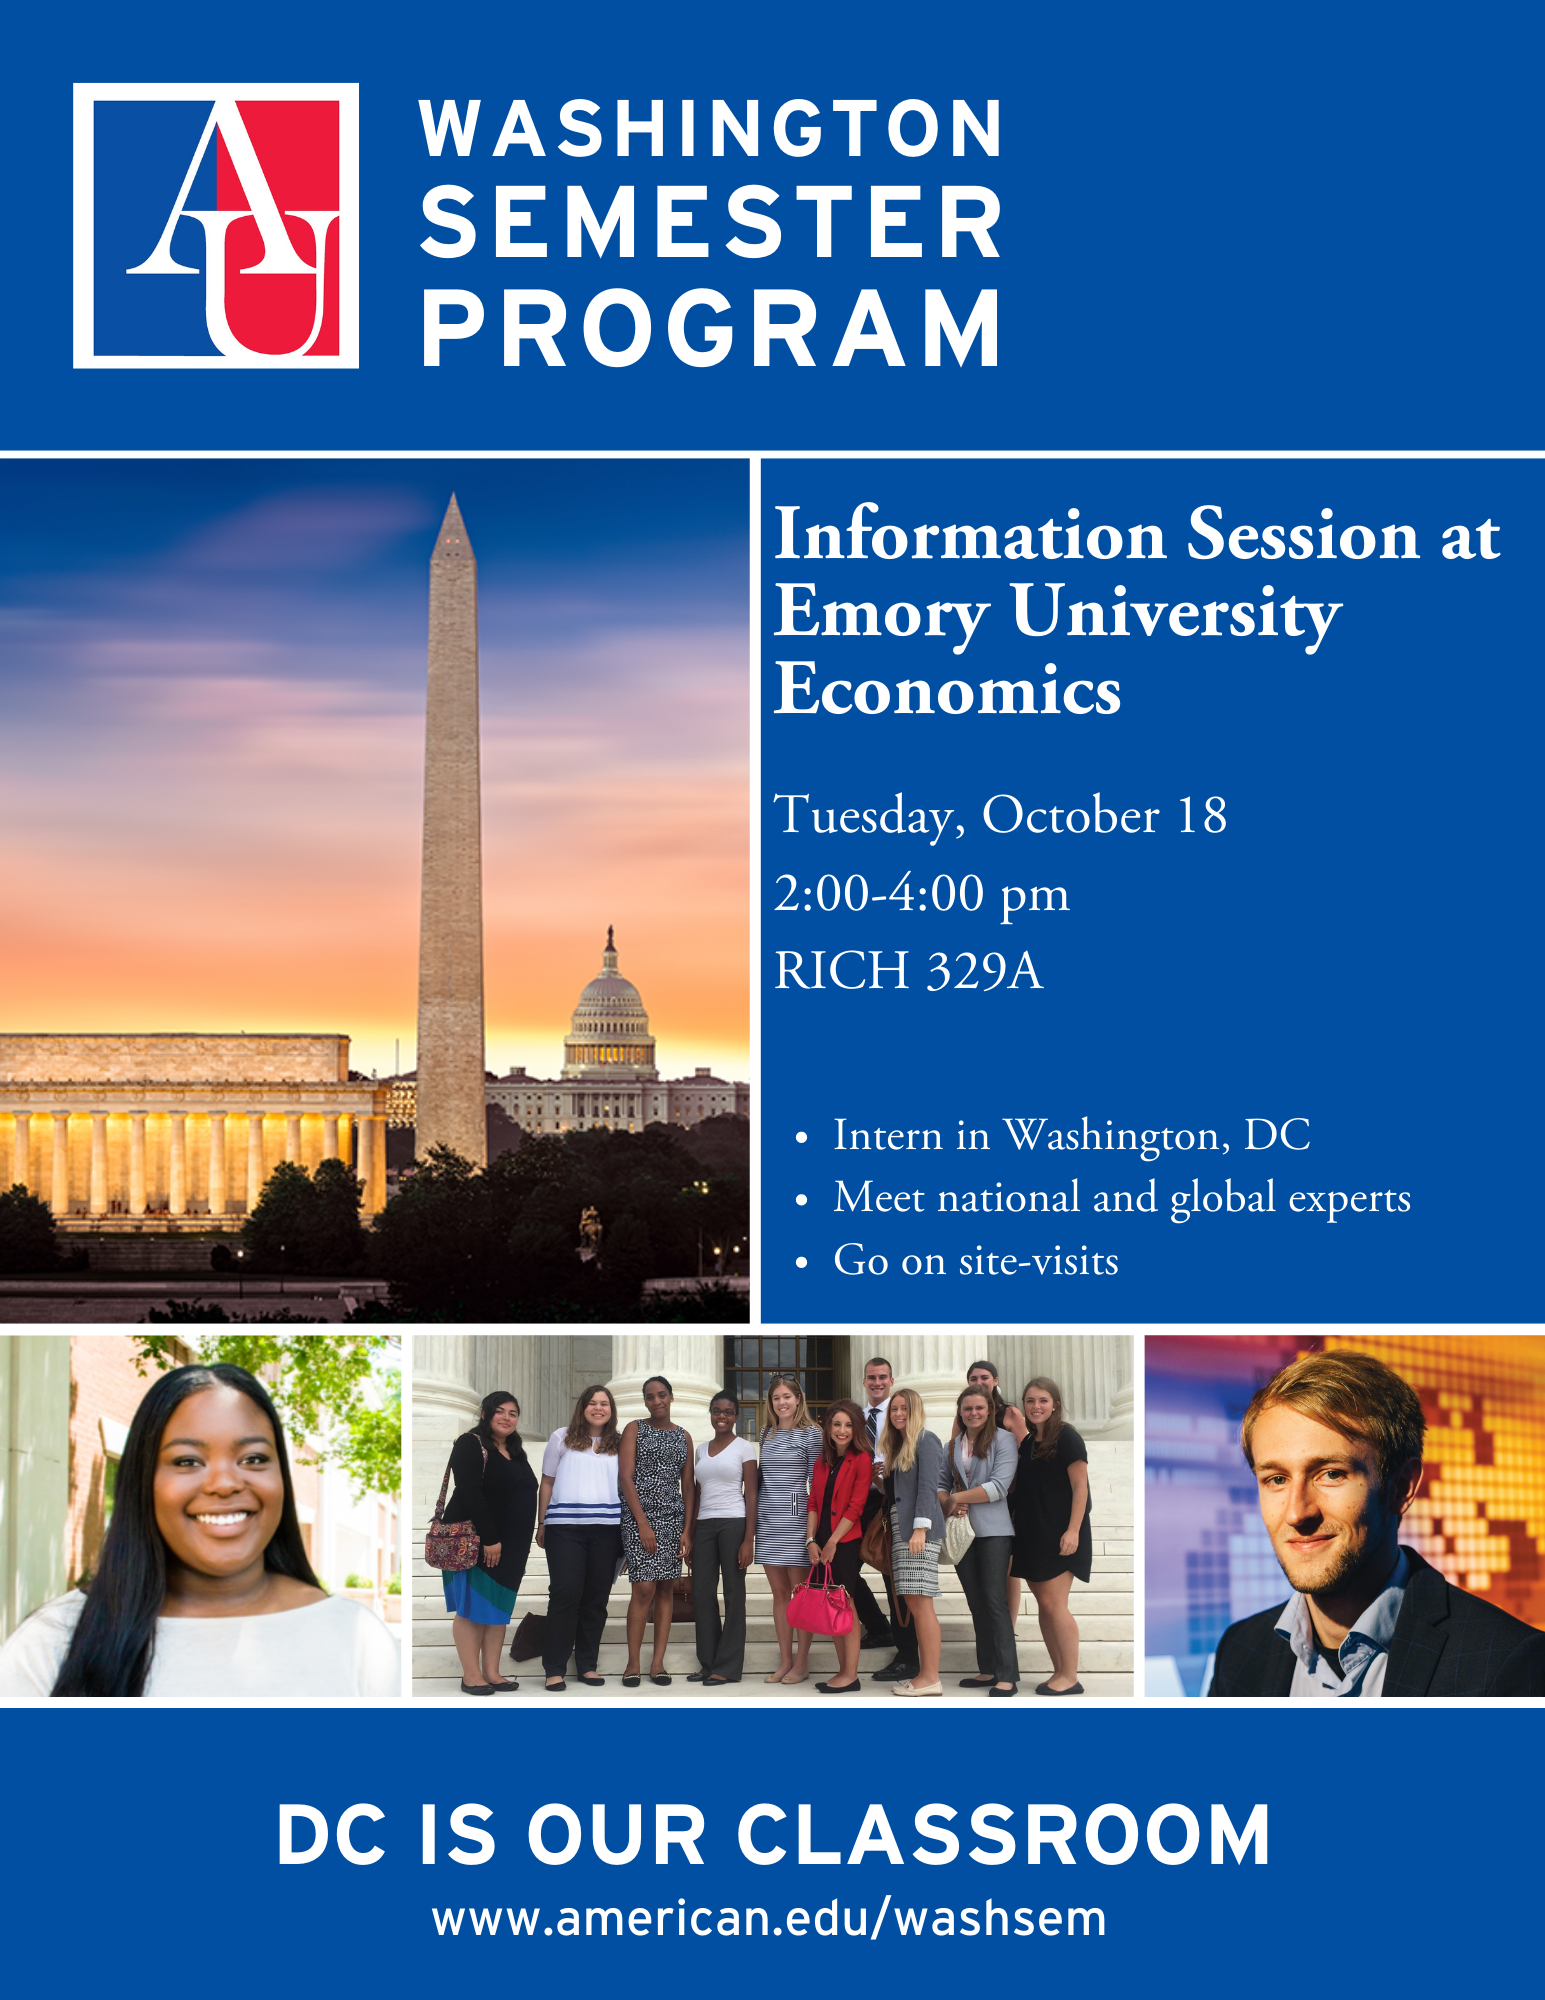 Washington Semester Program Information Session